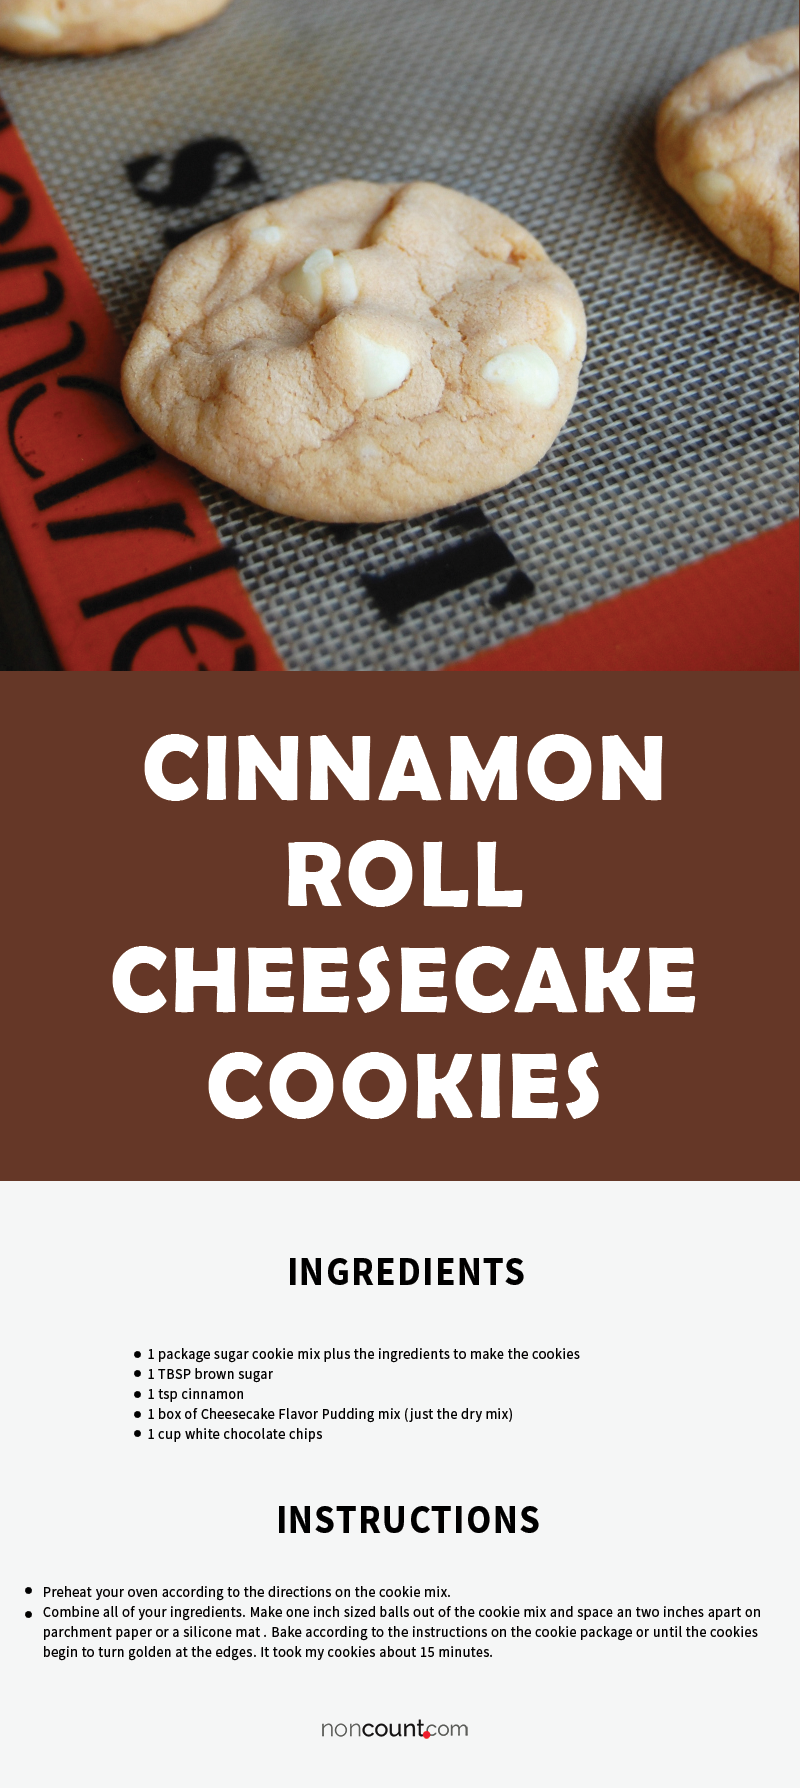 Cinnamon Roll Cheesecake Cookies Recipe Image